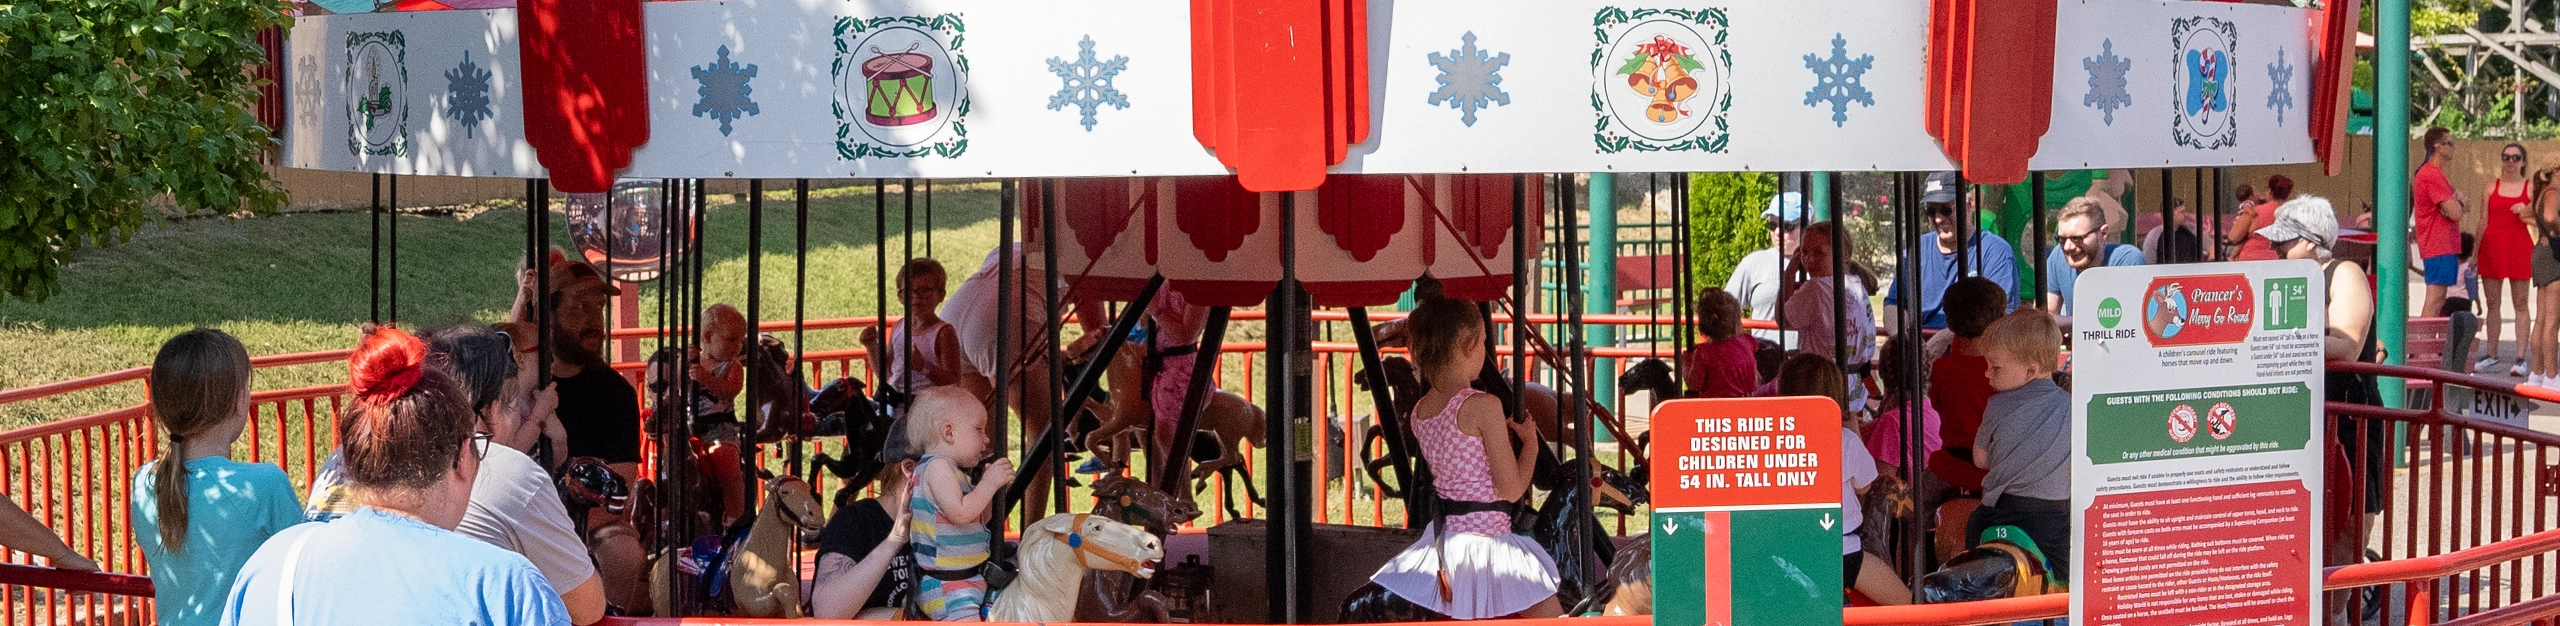 Prancer's Merry-Go-Round at Holiday World & Splashin' Safari in Santa Claus, Indiana.